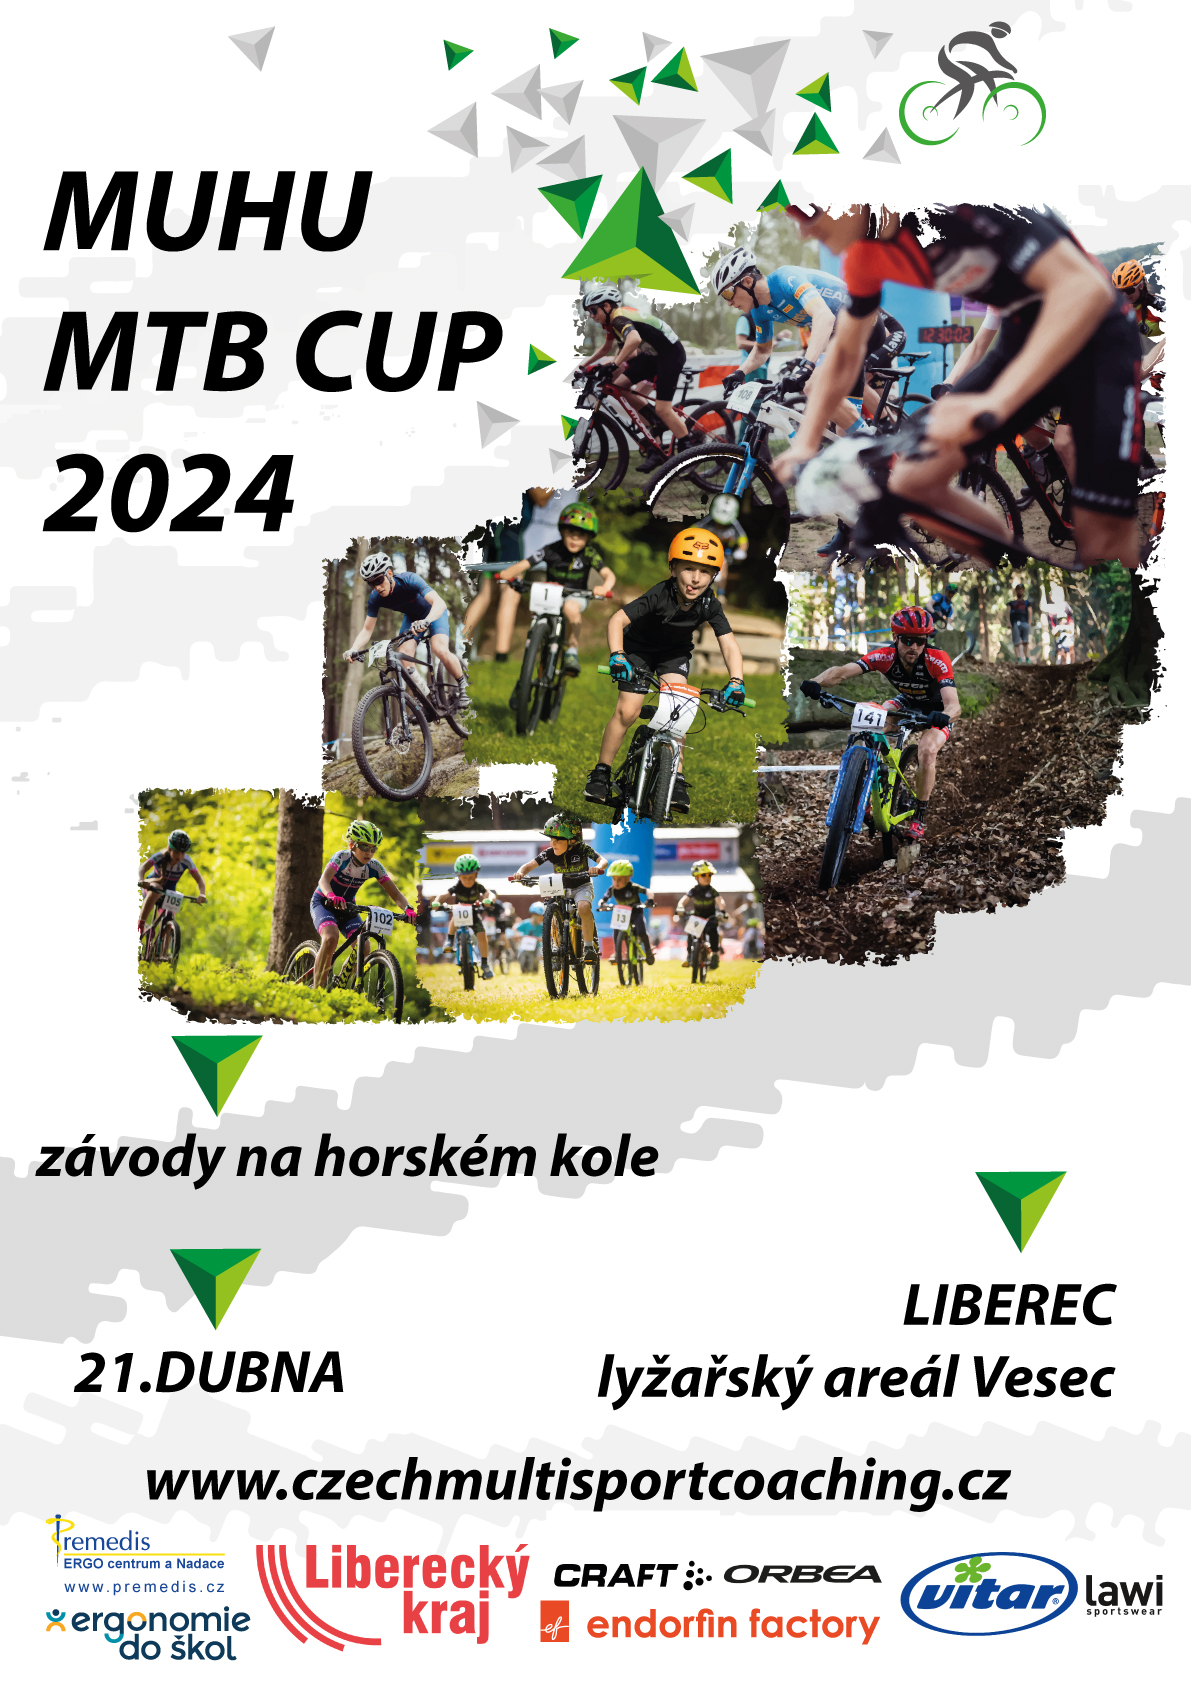 Muhu MTB Cup 2024